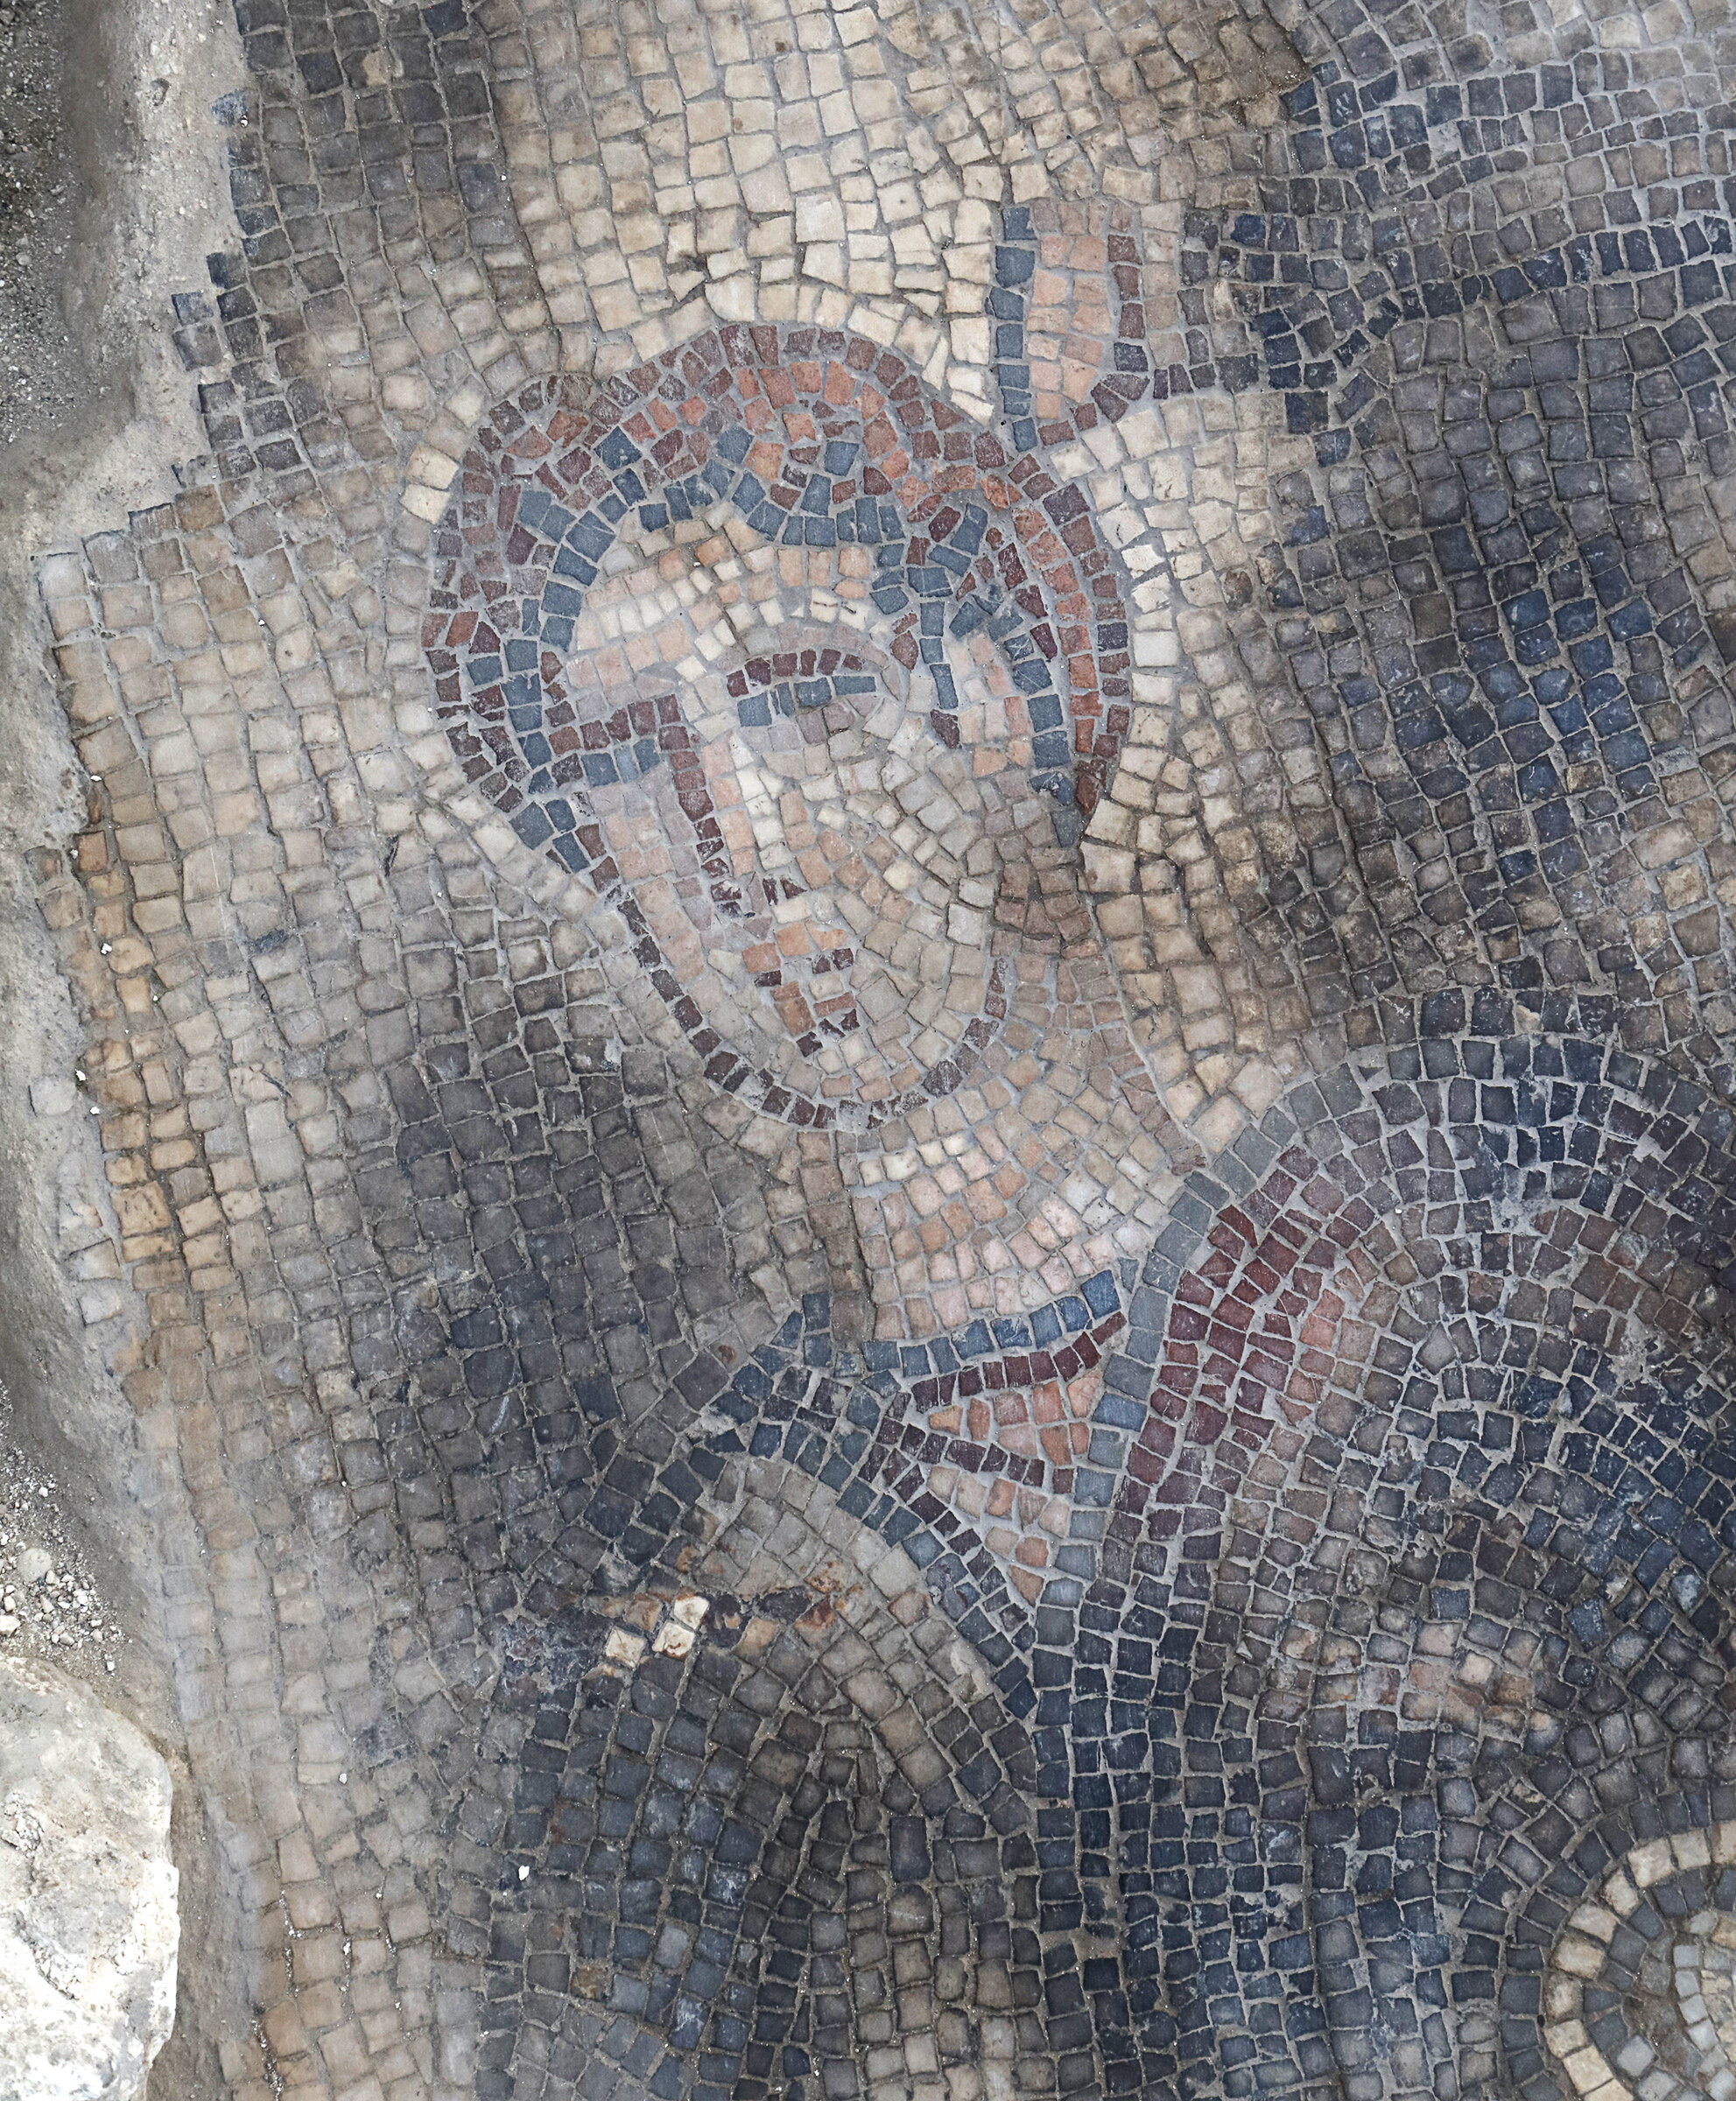 The Lod Mosaic—Jewish, Christian or Pagan? - Biblical Archaeology Society